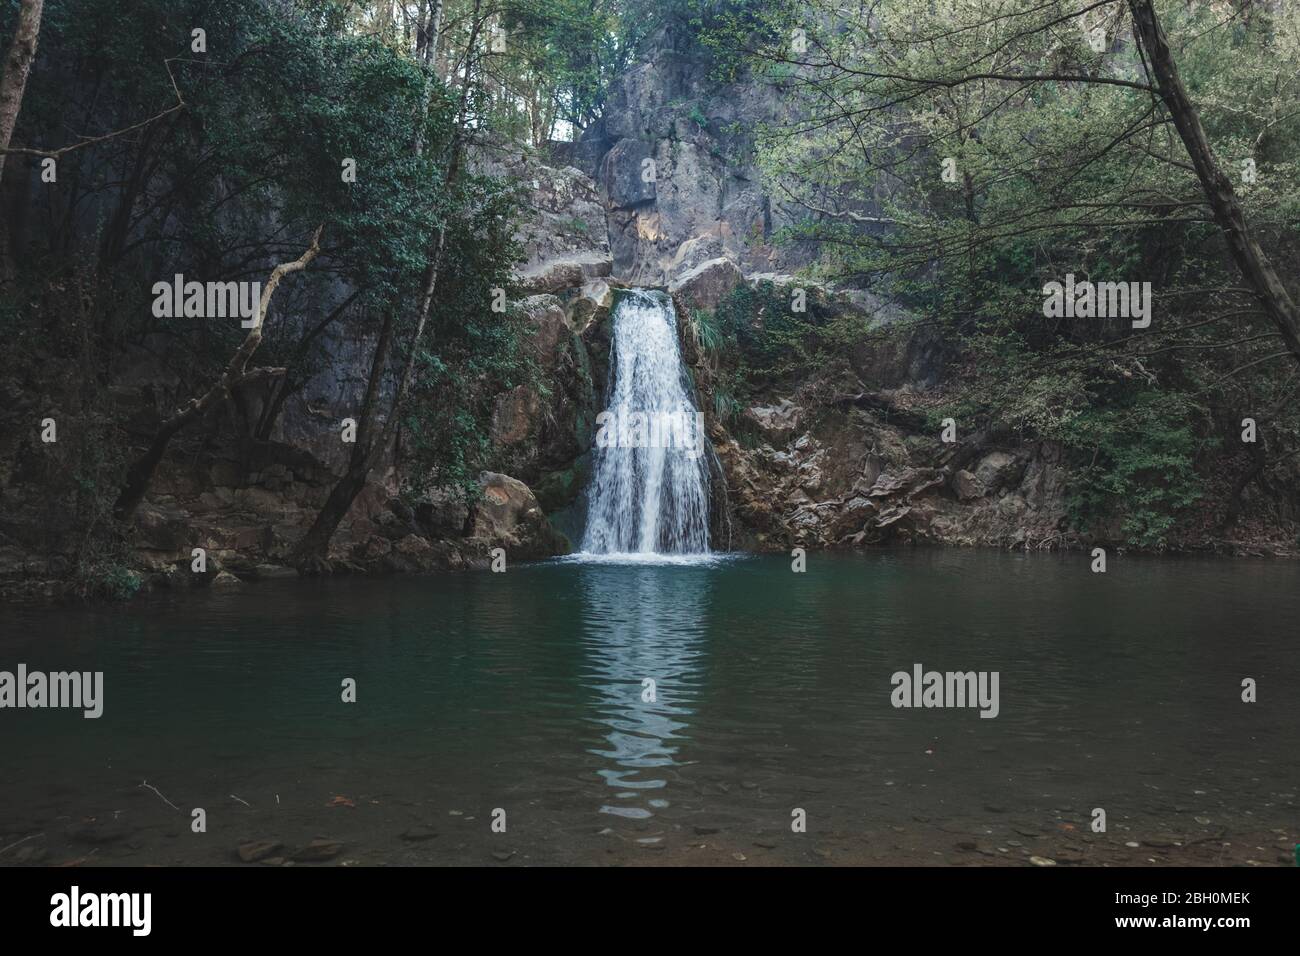 View of a beautiful and scenic waterfall at Kocacay Deresi, Antalya, Turkey. Stock Photo